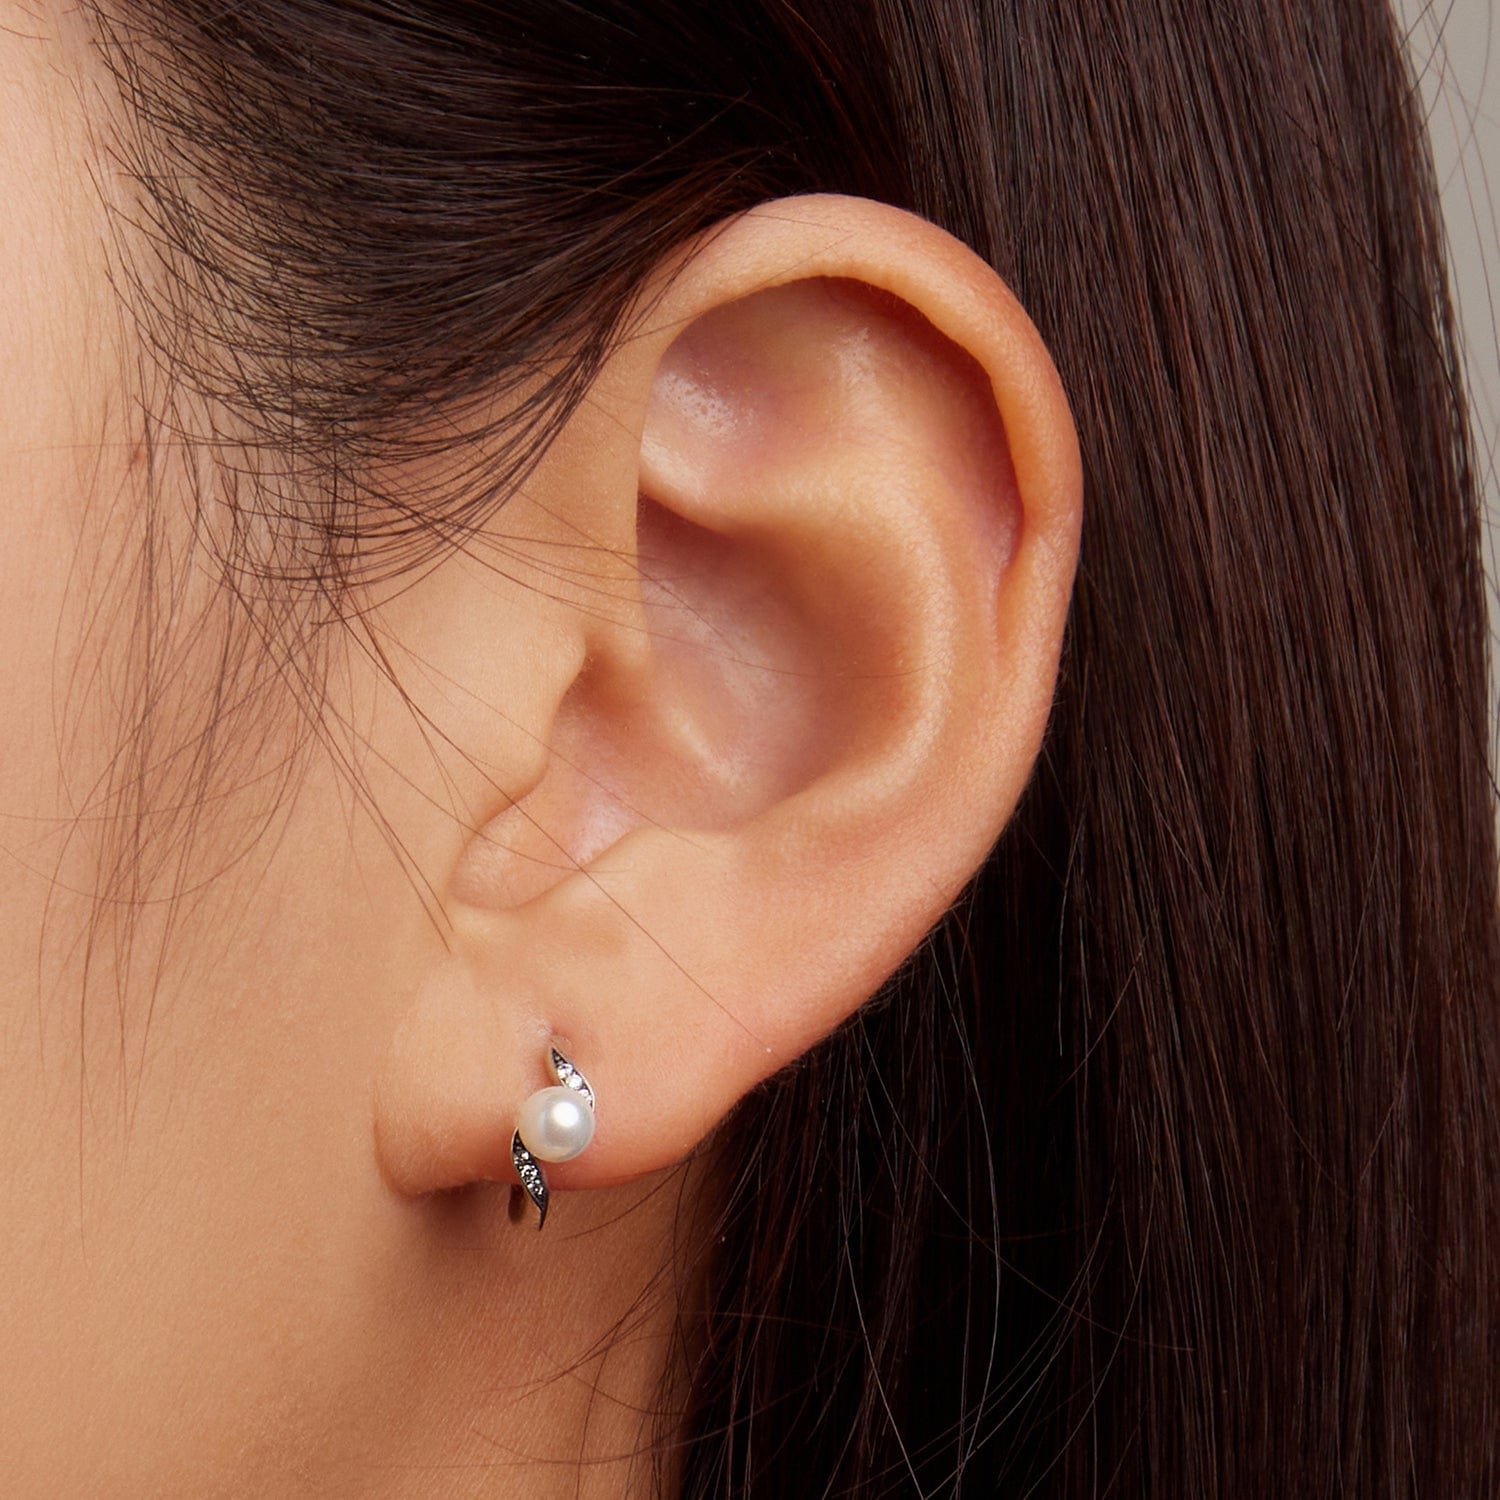 jewelaus Earrings Shell Hoop Earrings